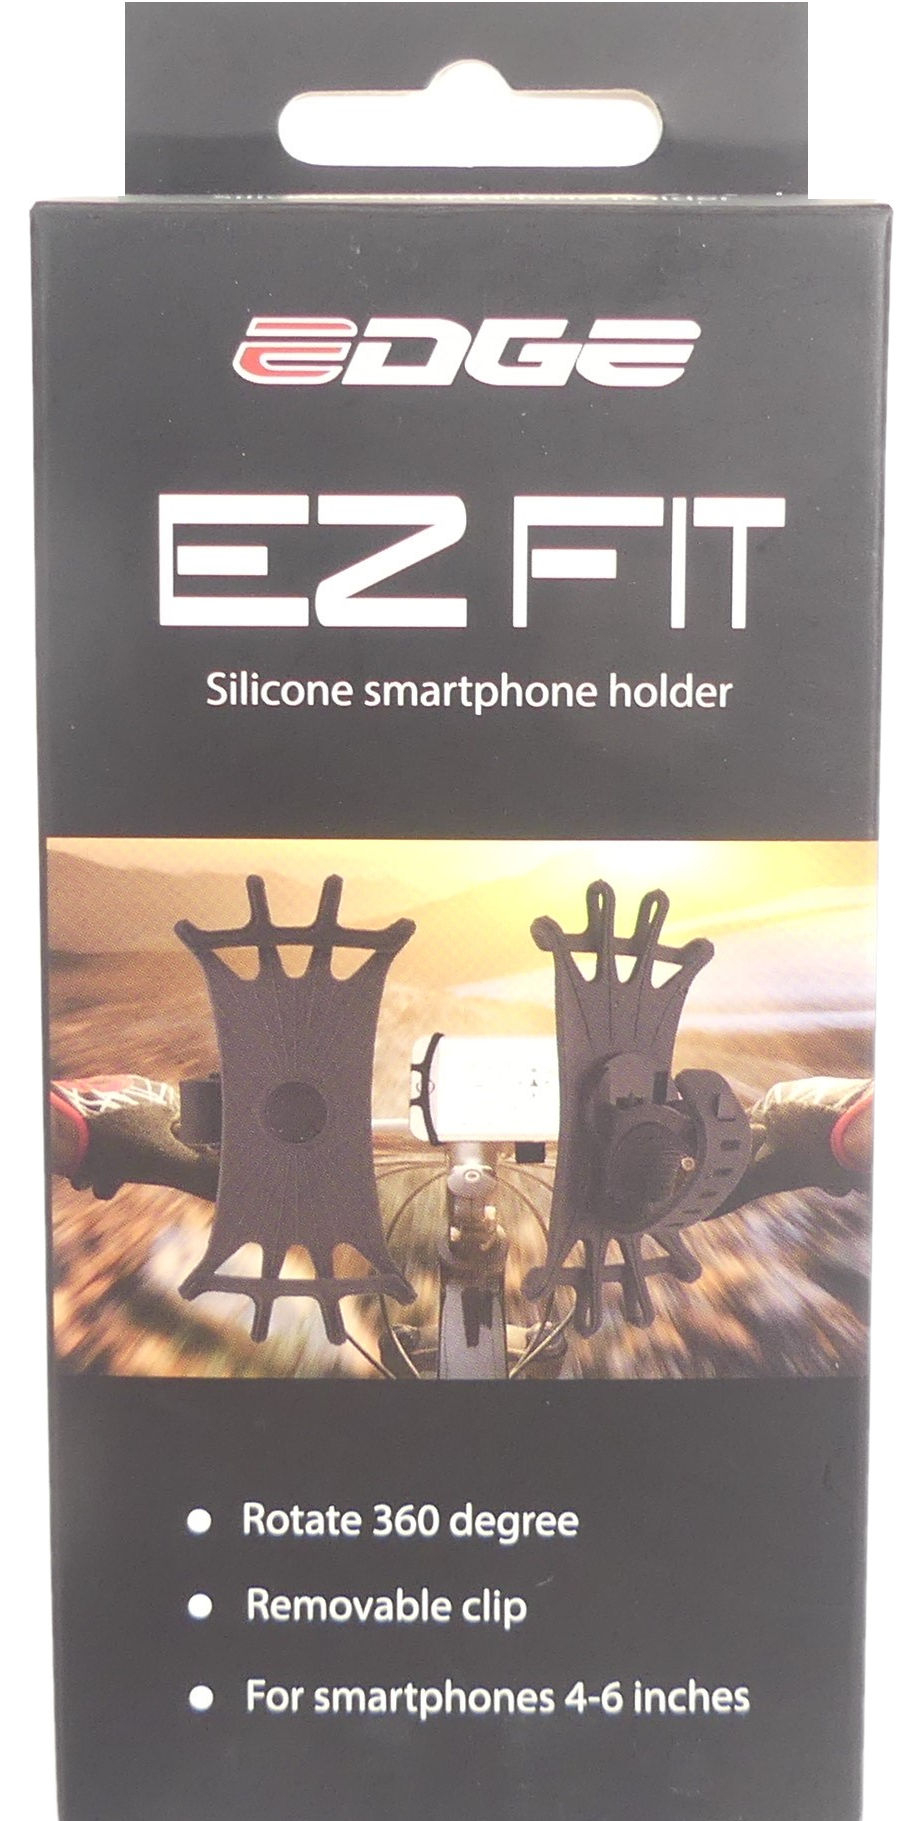 Telefoonhouder Edge EZ Fit - 360° - Siliconen - zwart